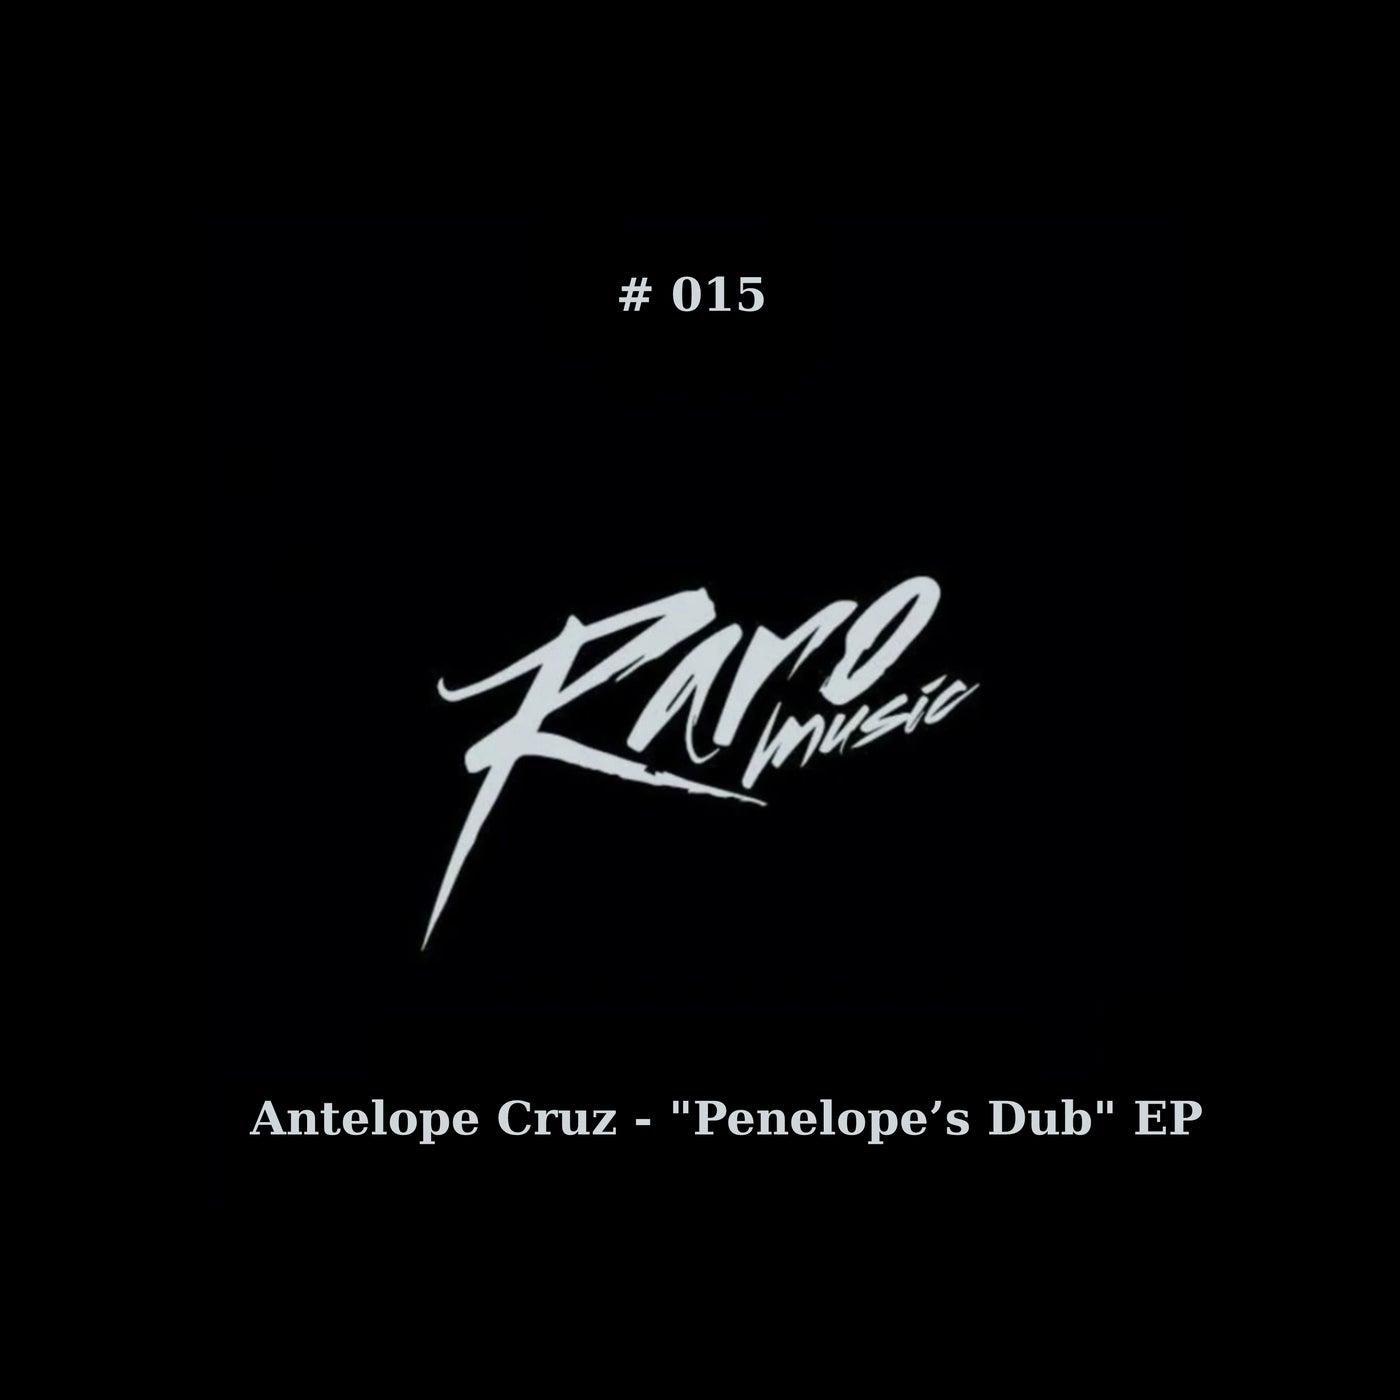 Penelope's Dub